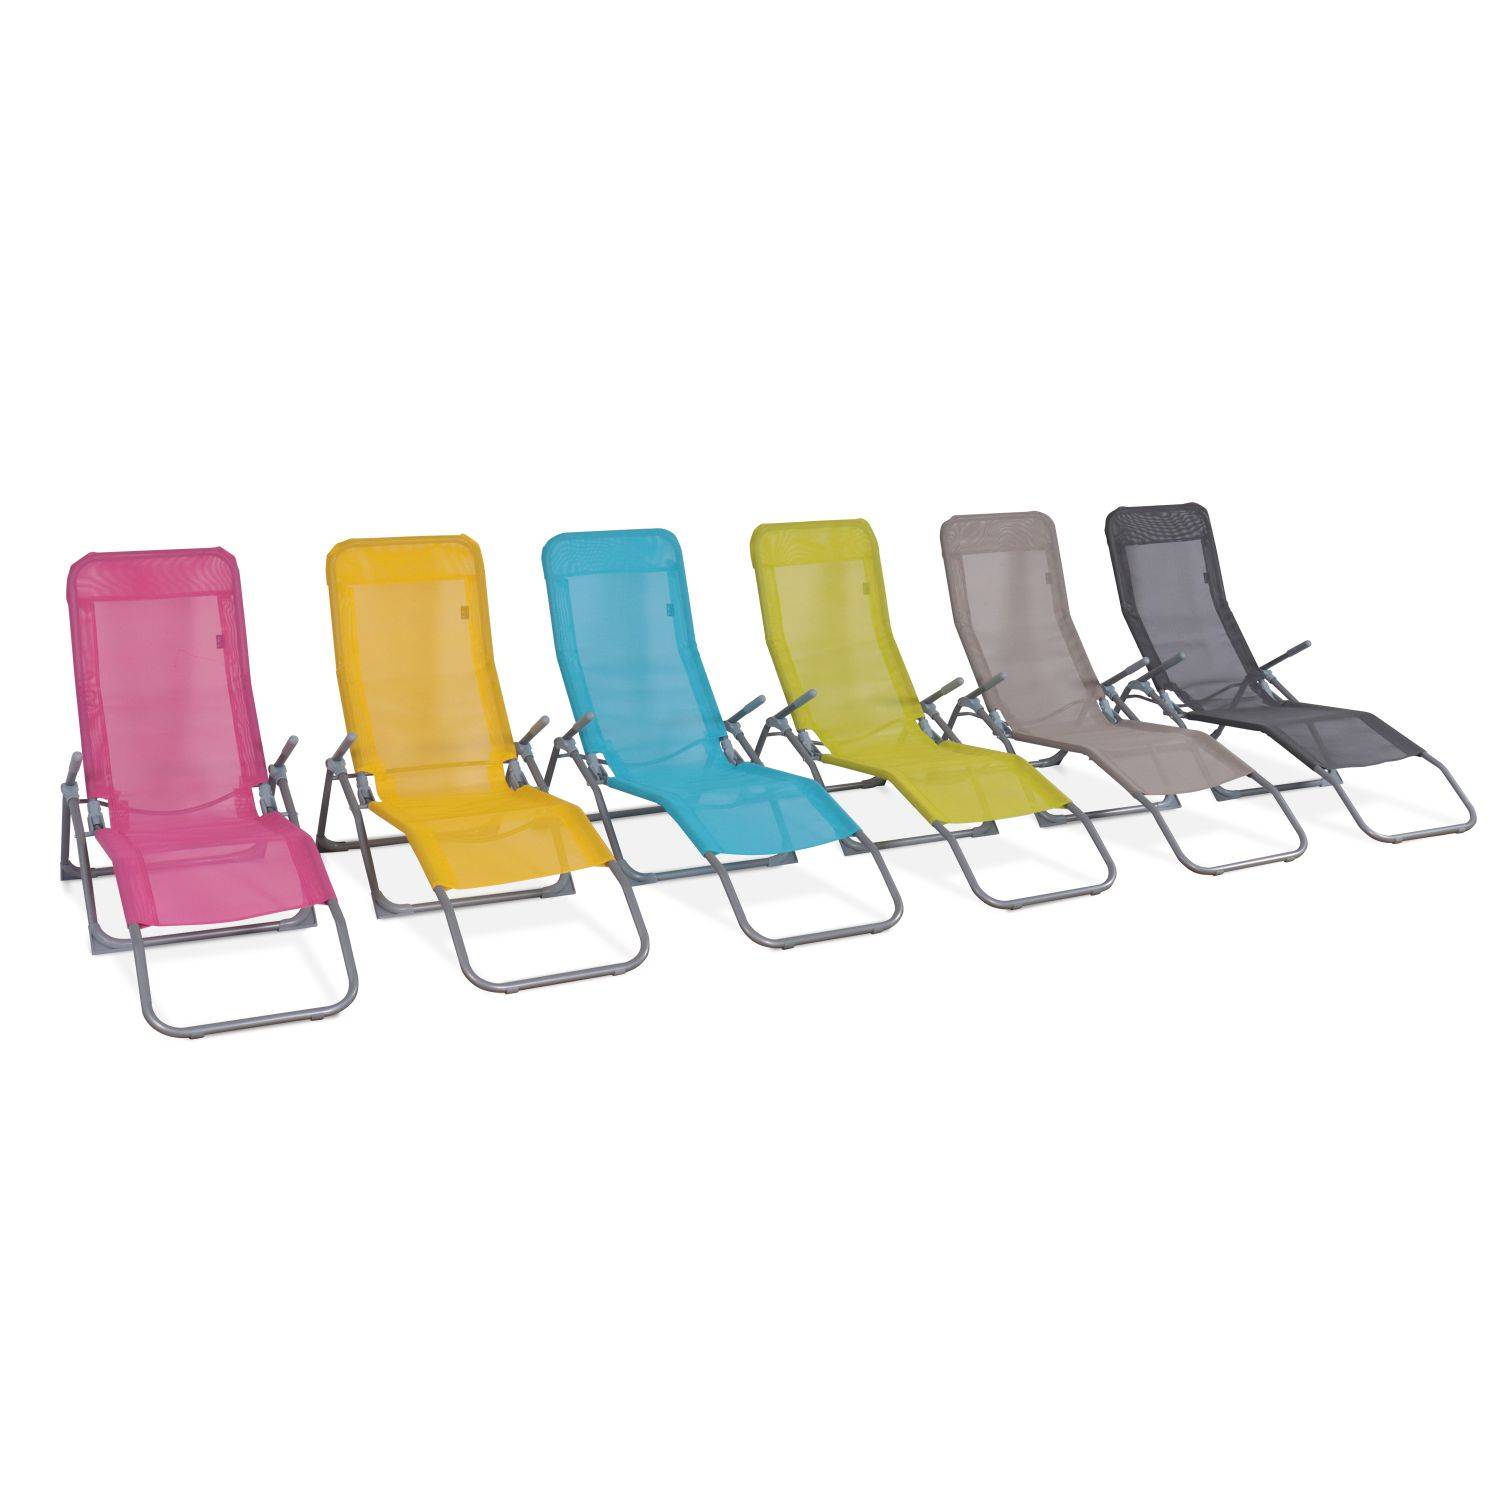 Set van 2 opvouwbare ligstoelen - Levito Geel - Ligstoelen van textileen, 2 posities, opvouwbare ligstoelen Photo6